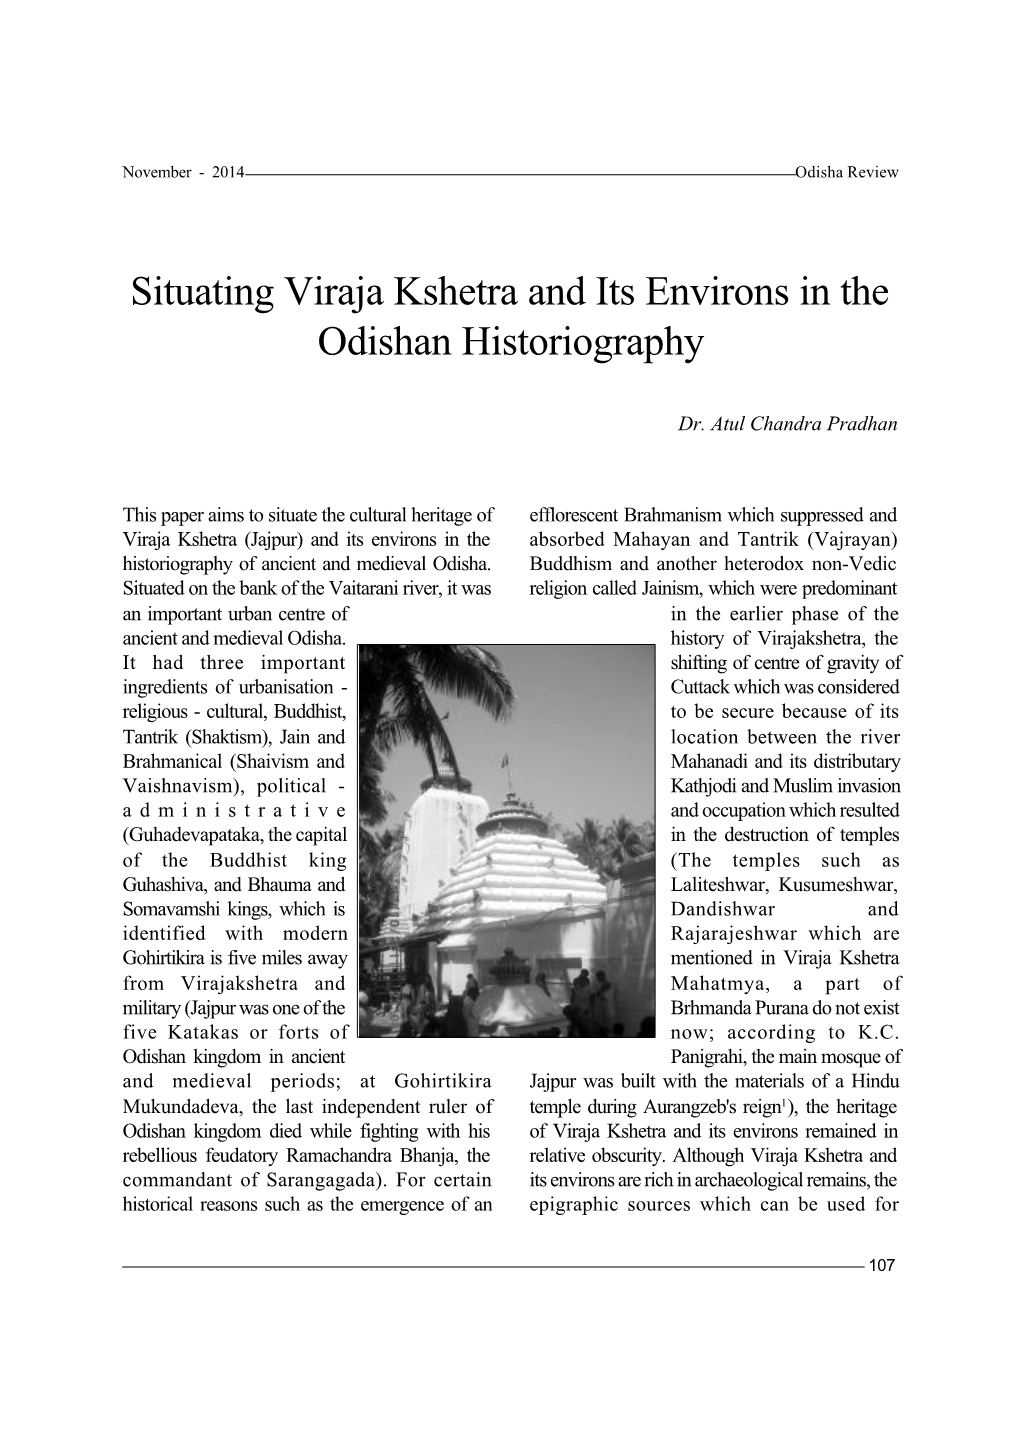 Situating Viraja Kshetra and Its Environs in the Odishan Historiography